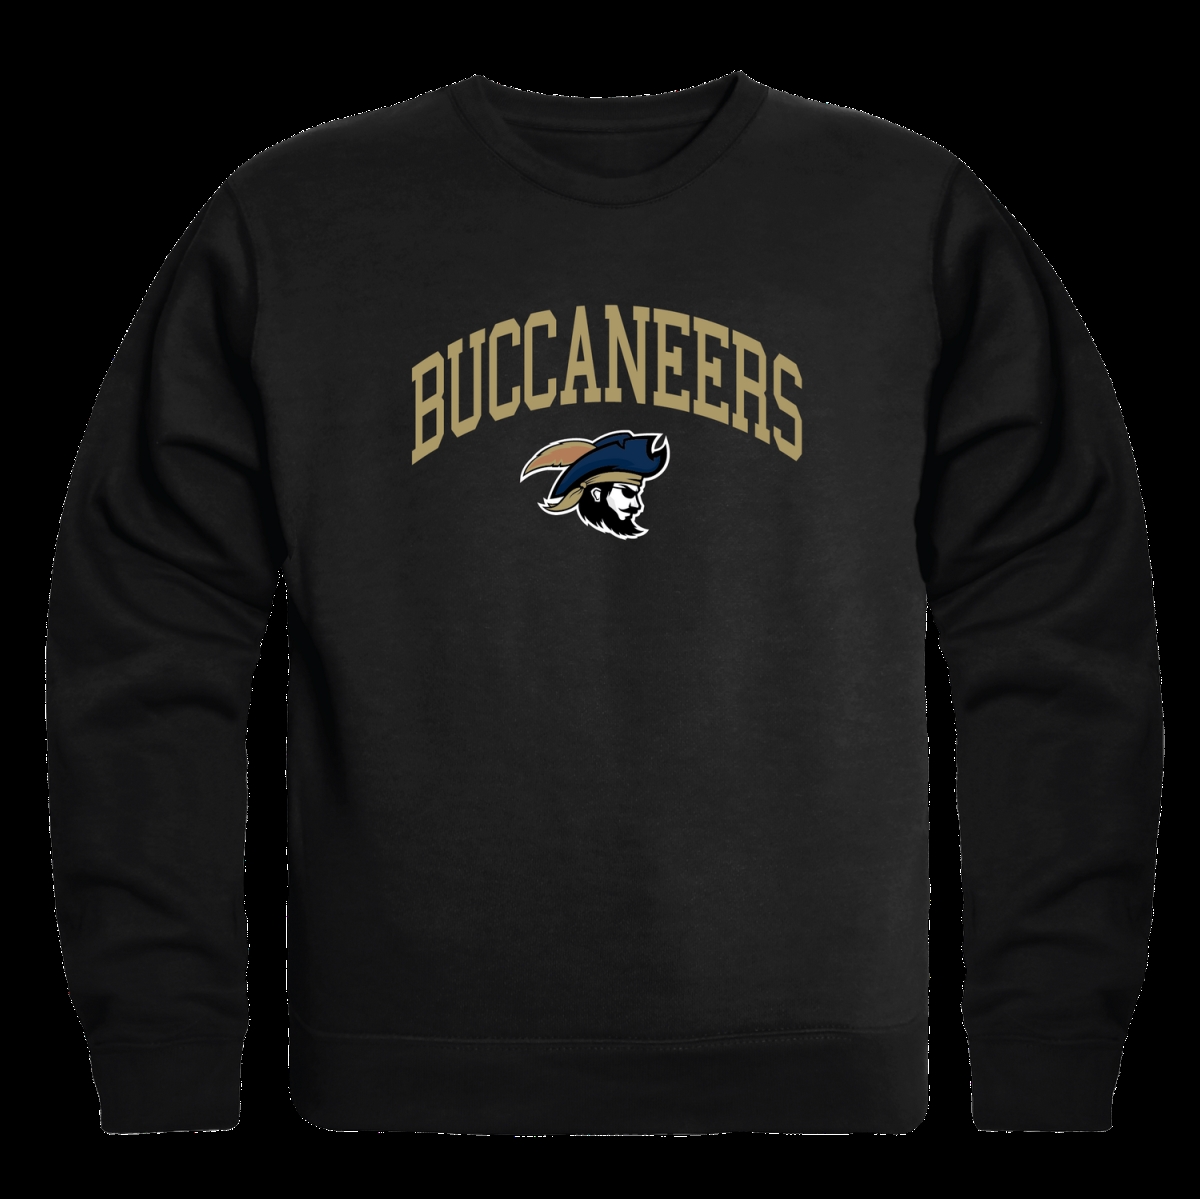 W Republic 541-736-BLK-04 College of Charleston Southern Buccanneers Campus Crewneck Sweatshirt&#44; Black - Extra Large